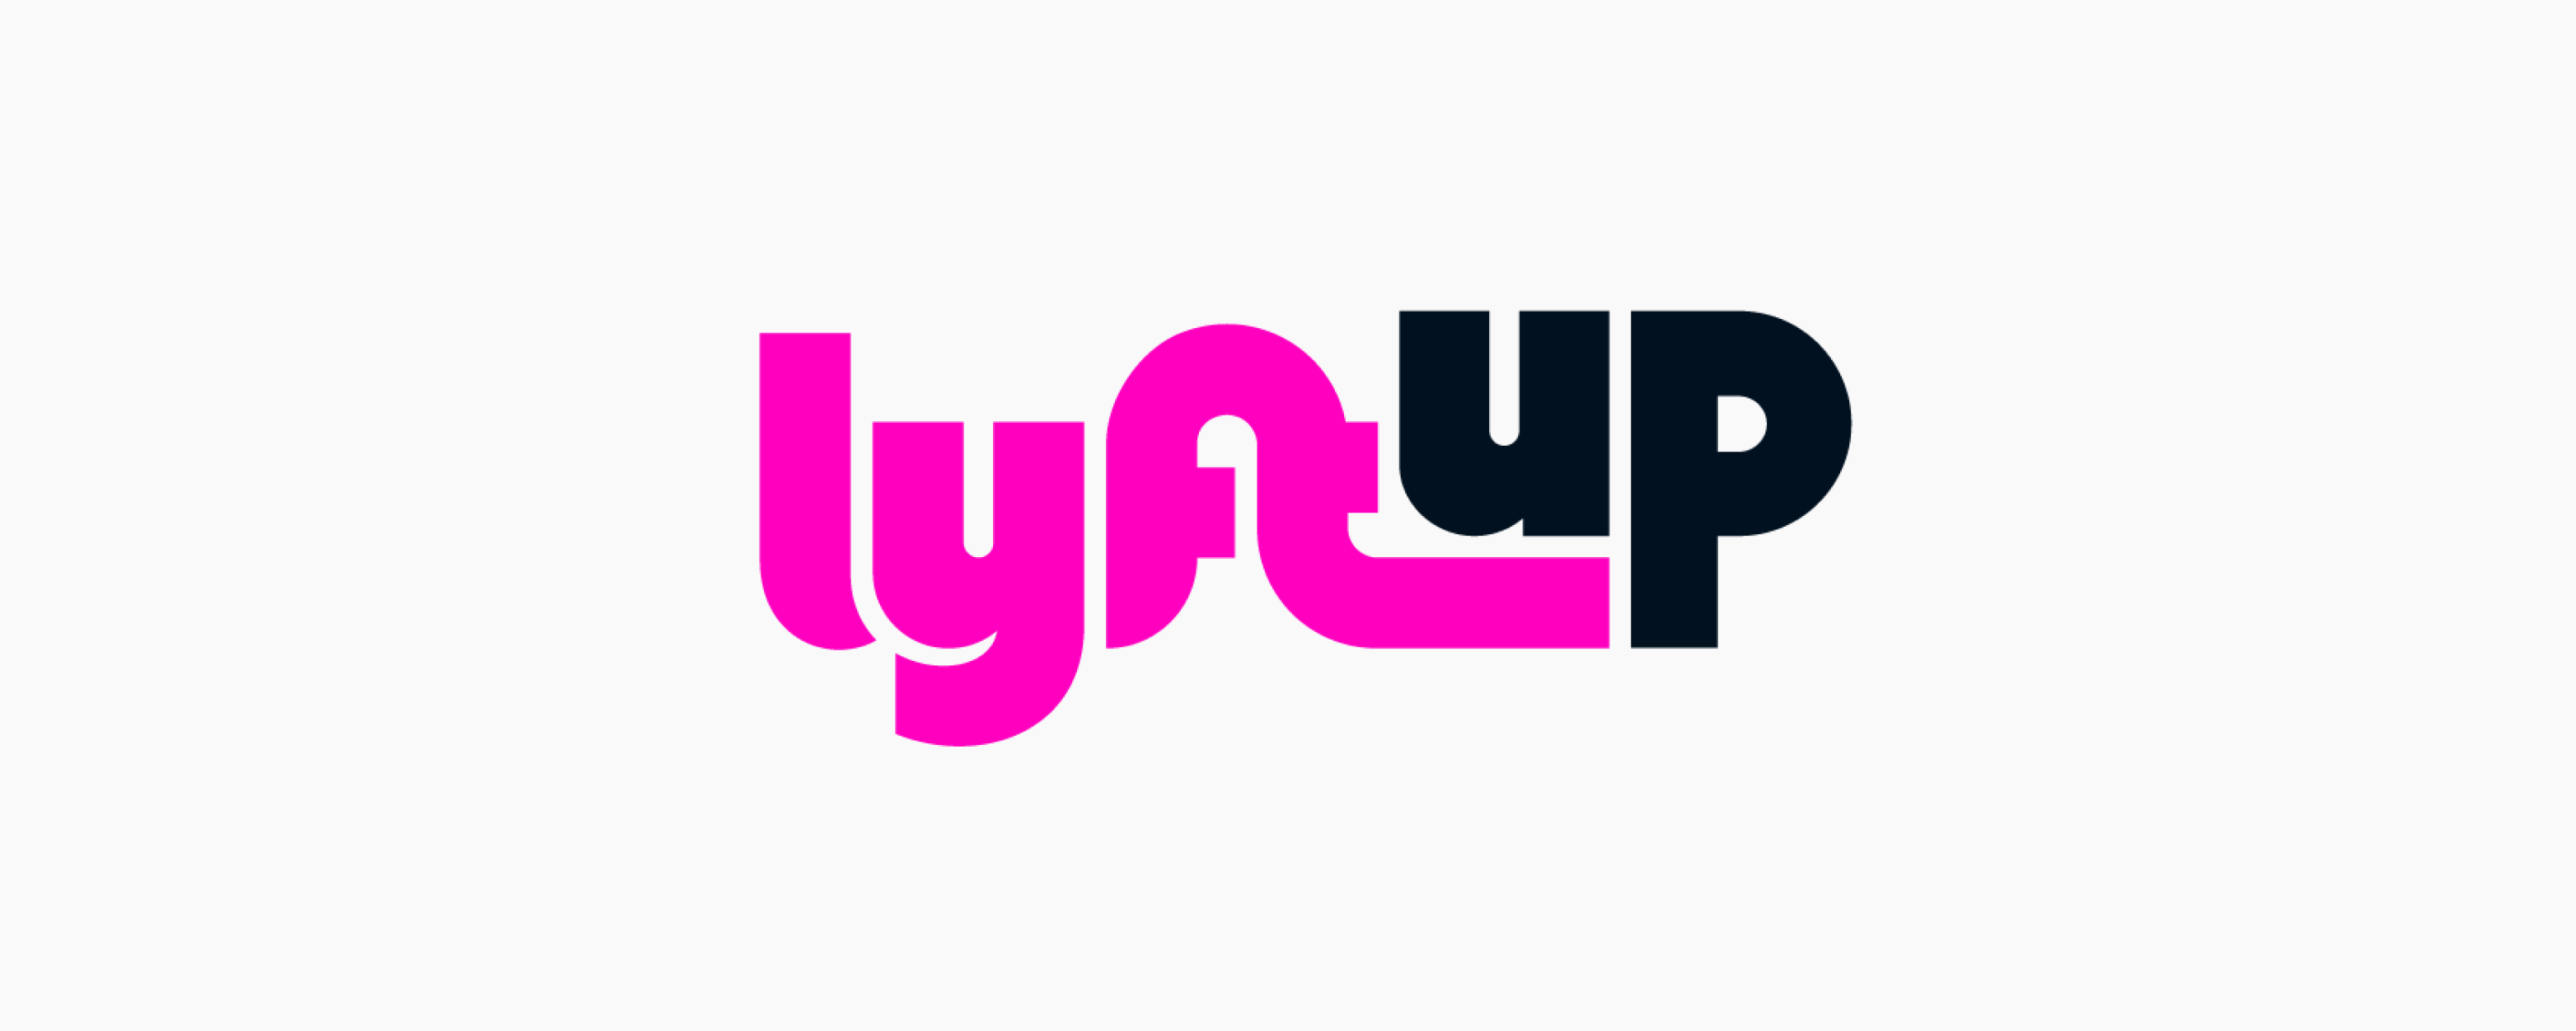 The LyftUp logo.